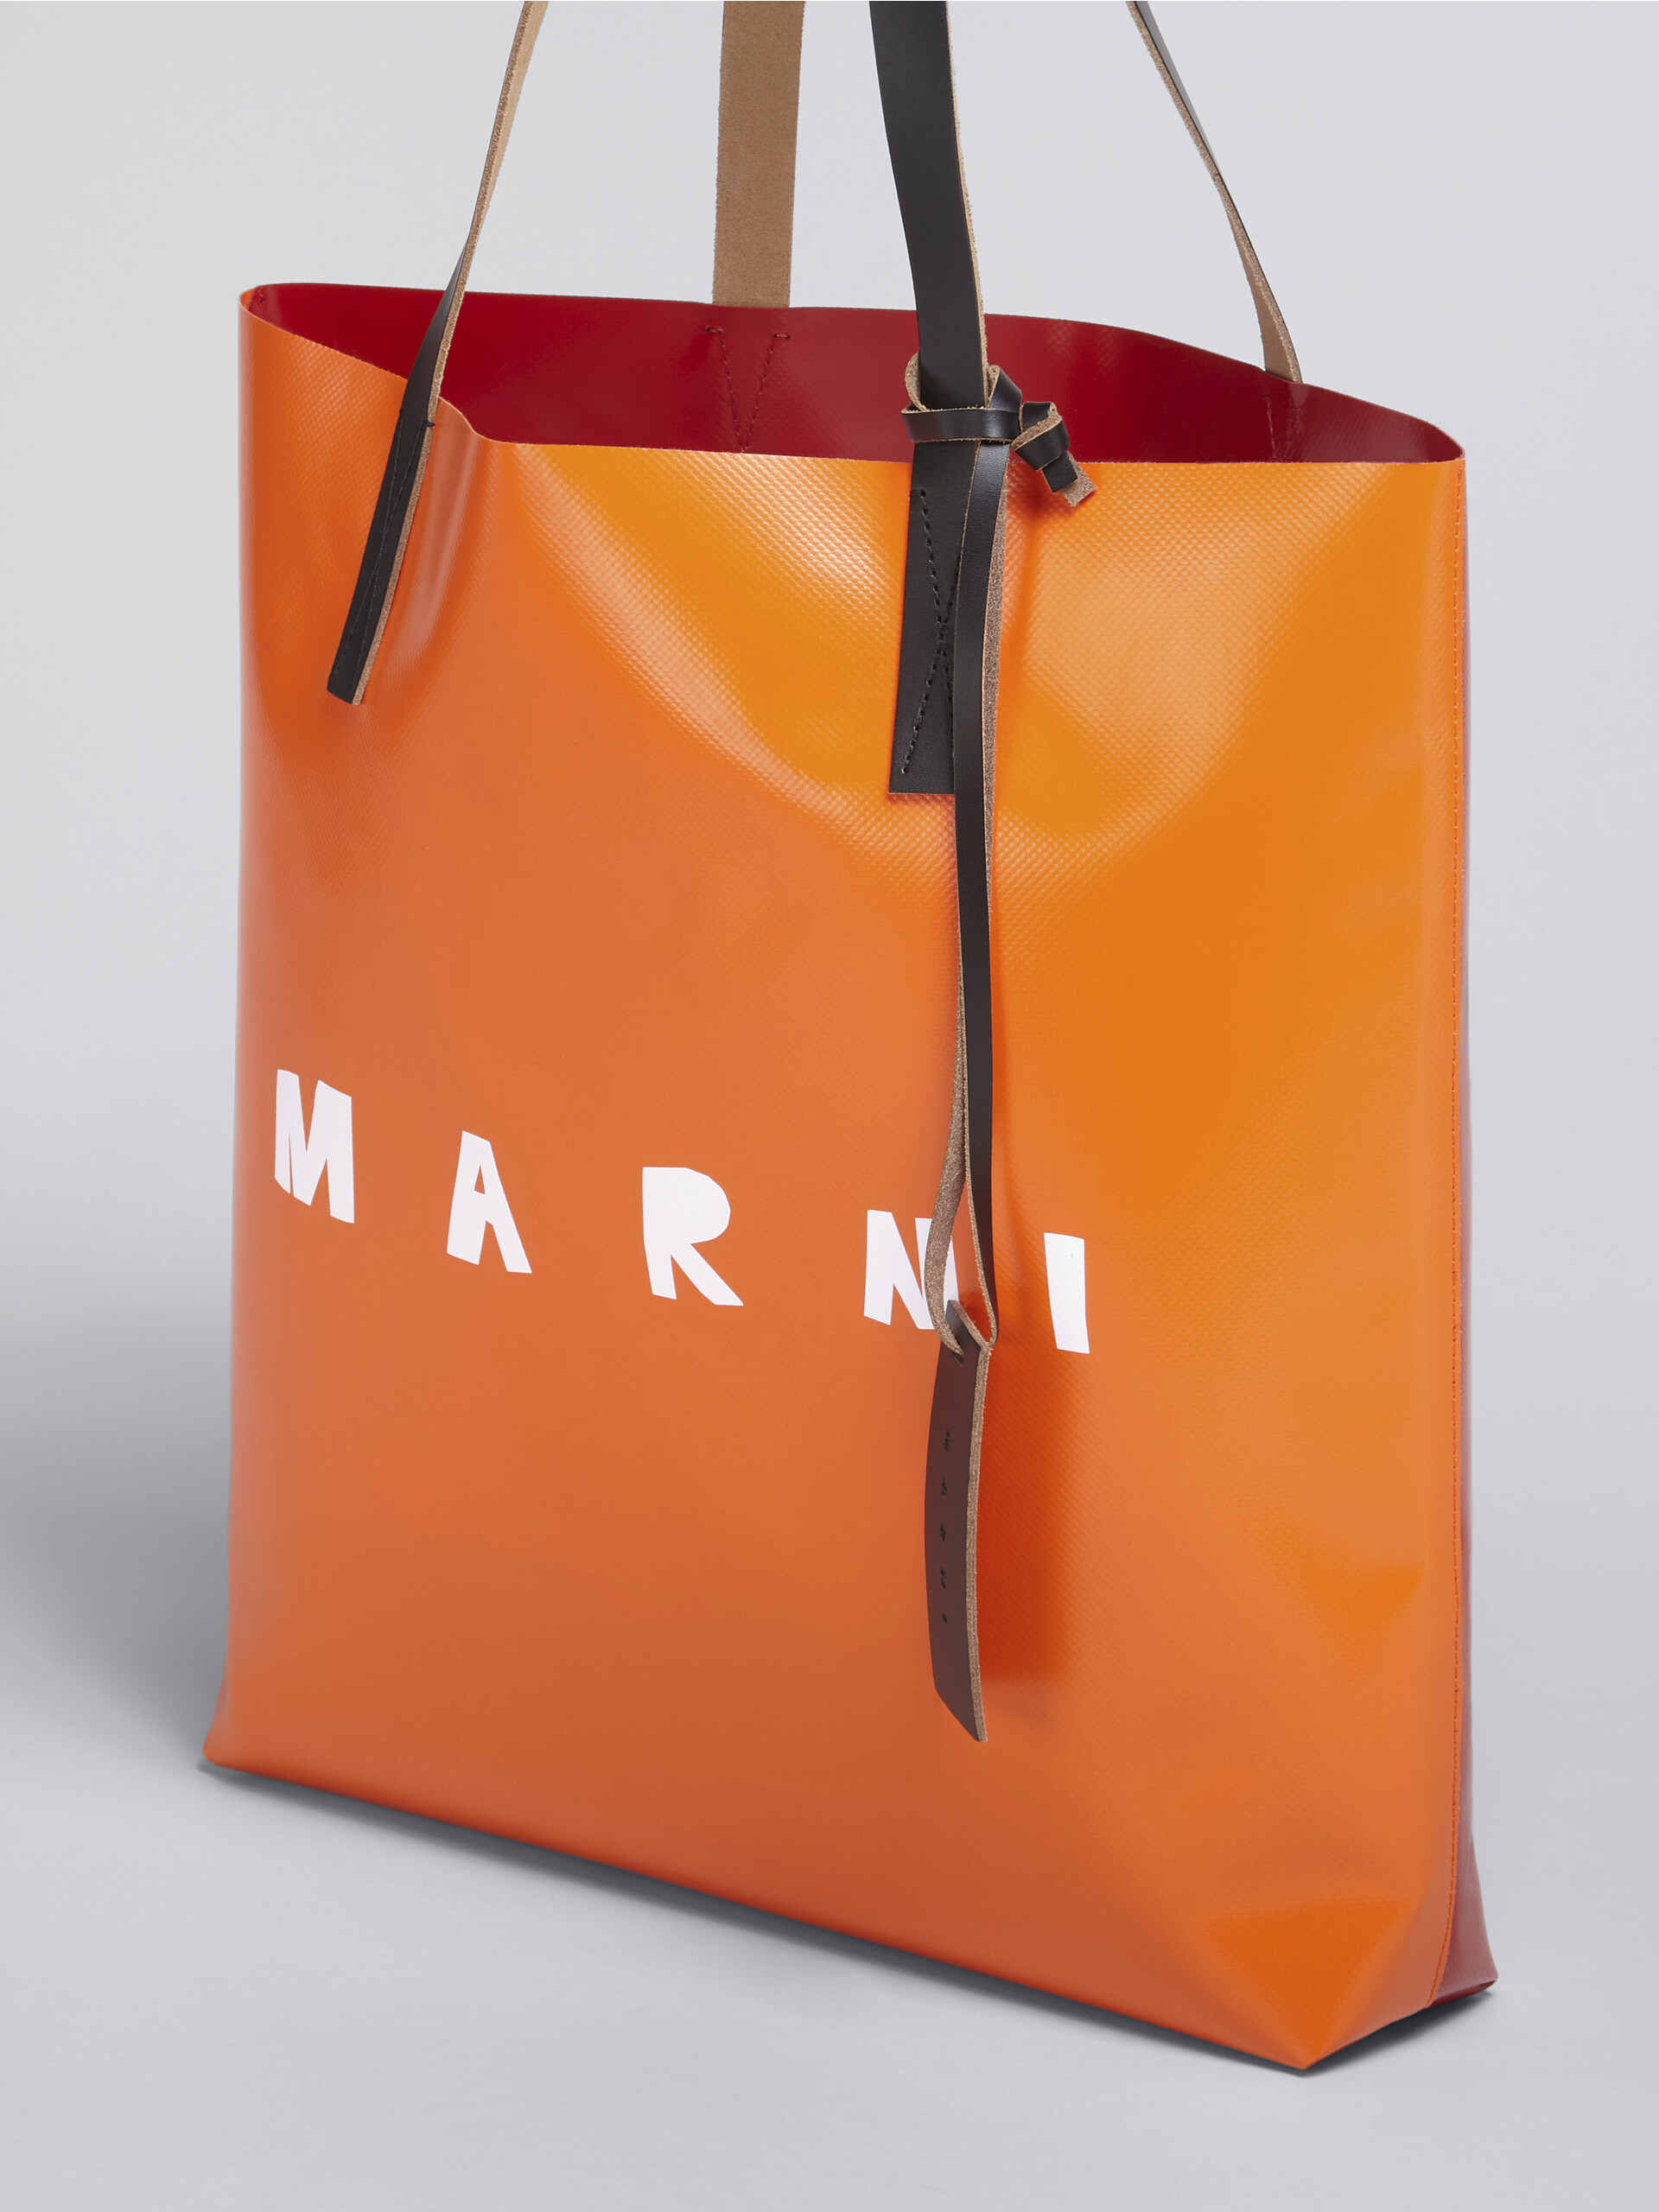 Borsa shopping in PVC con manici in pelle e logo Marni fuxia e arancione - Borse shopping - Image 3